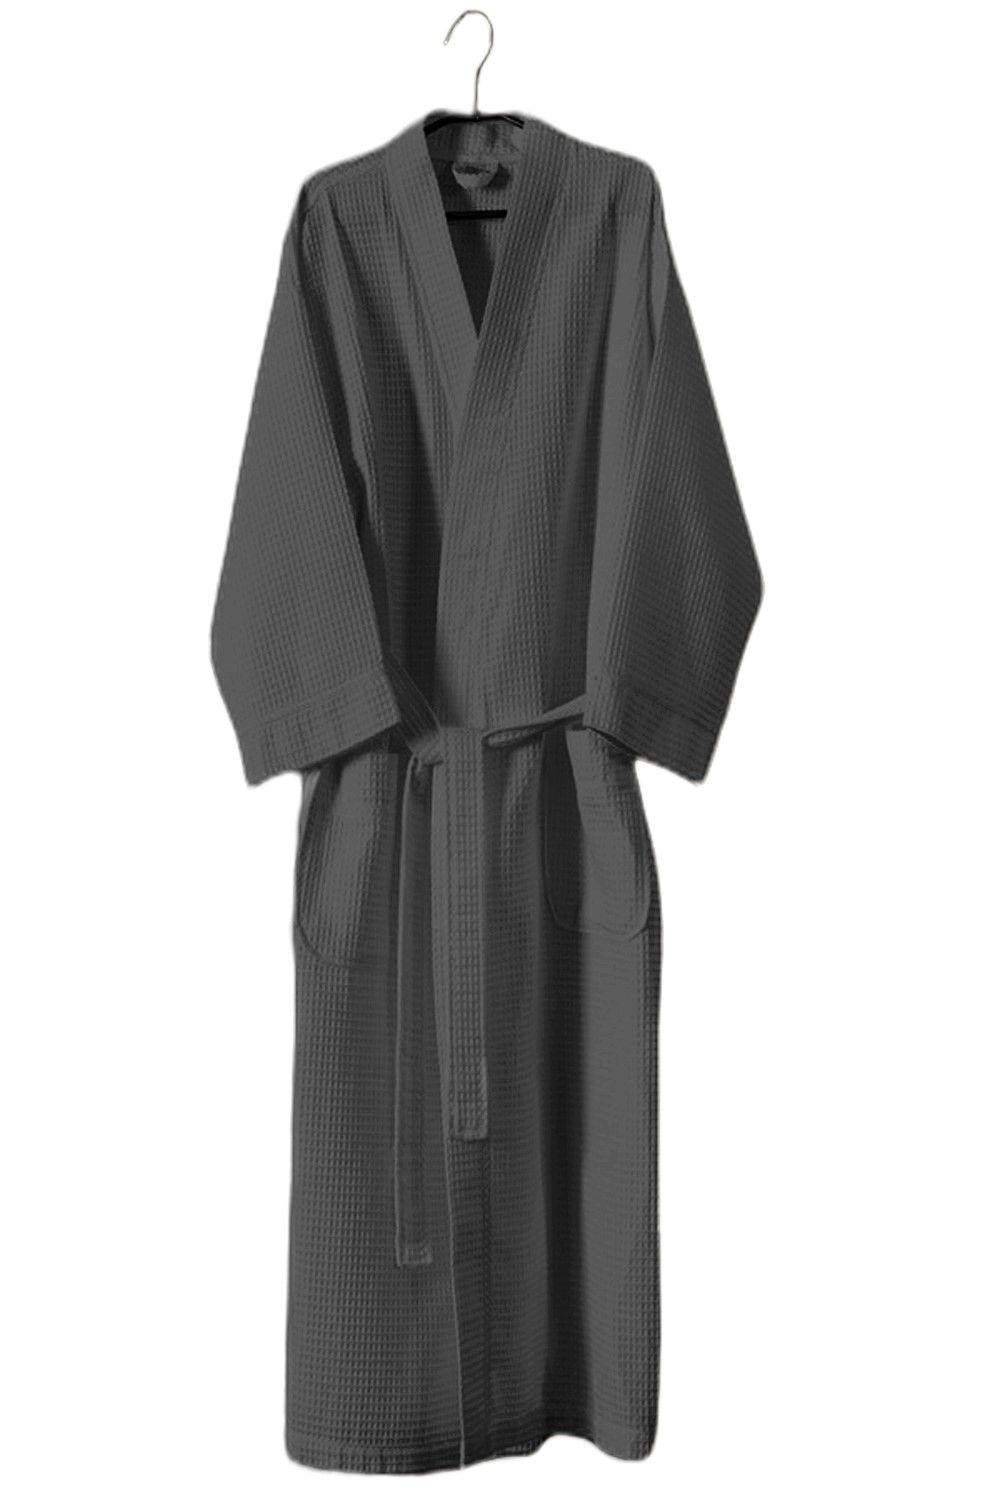 50-50-waffle-kimono-robe-one-size-charcoal